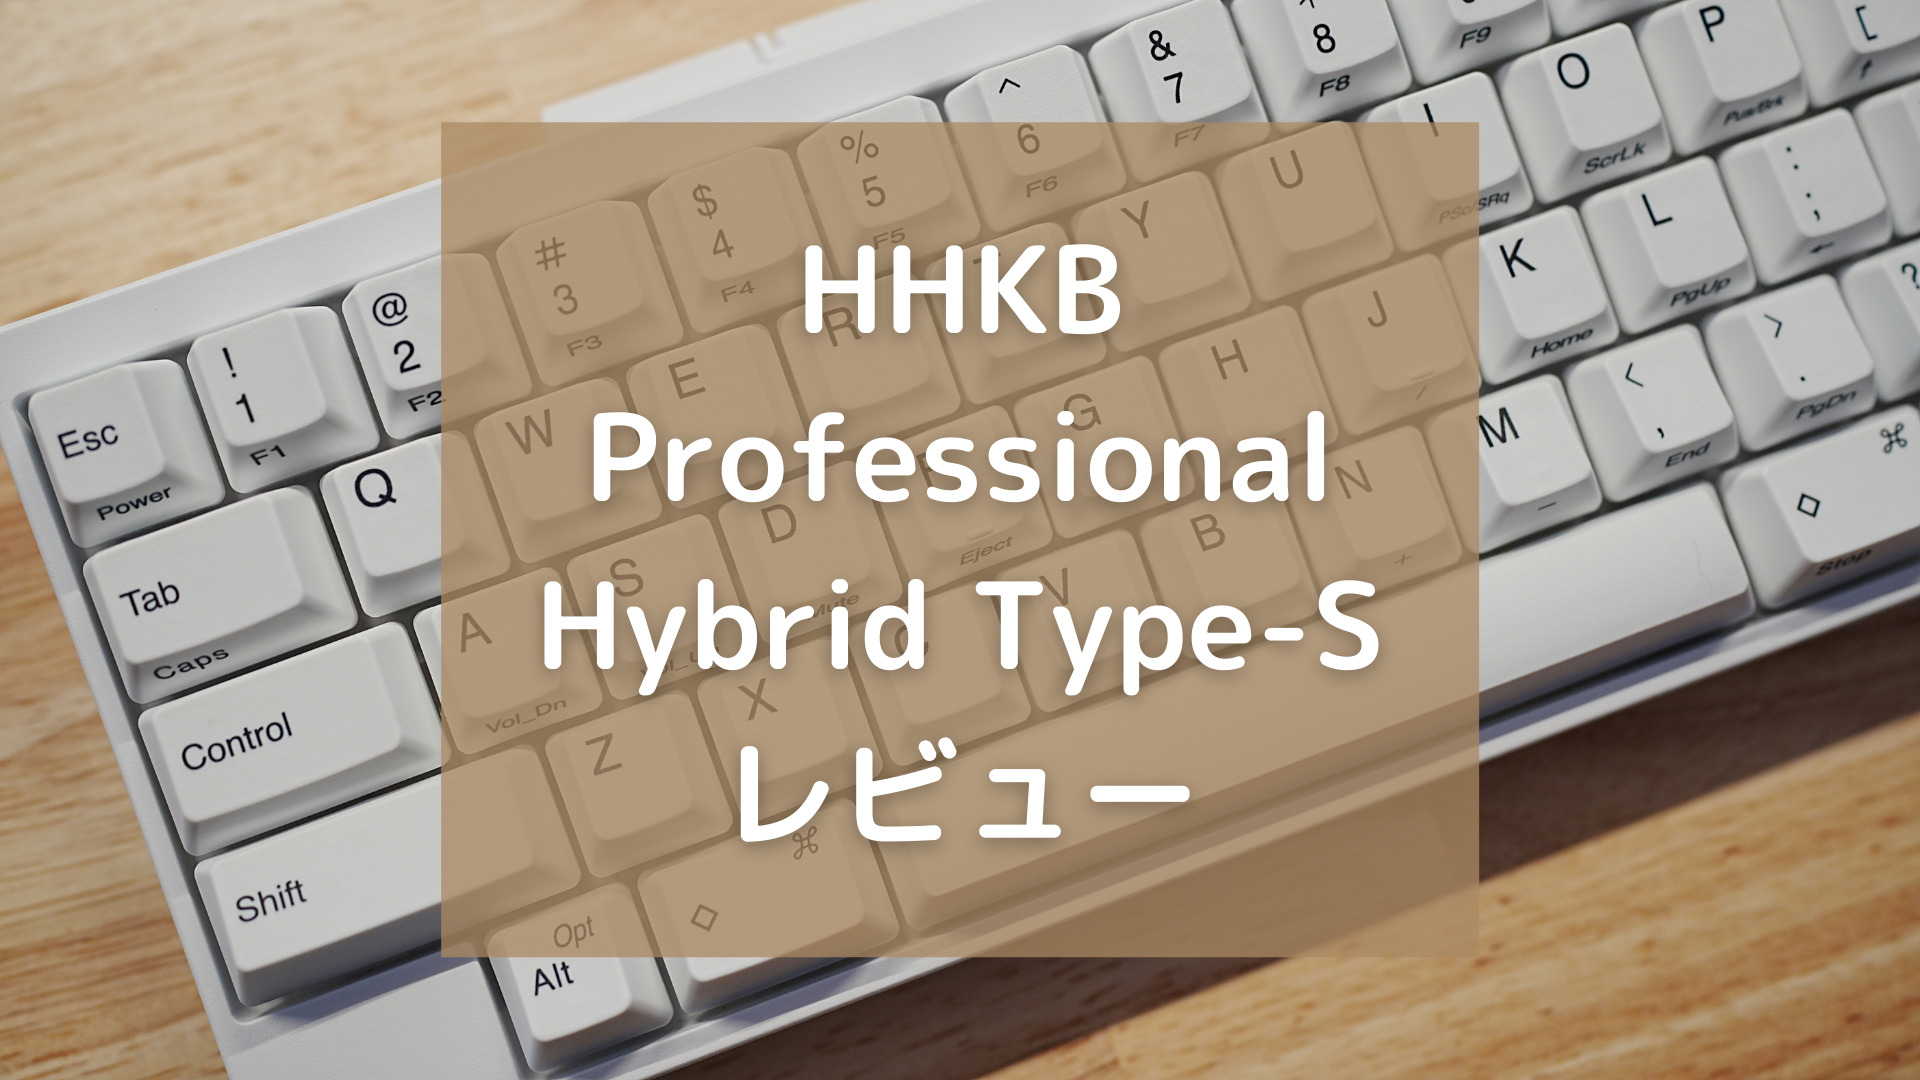 HHKB Professional Hybrid Type-S